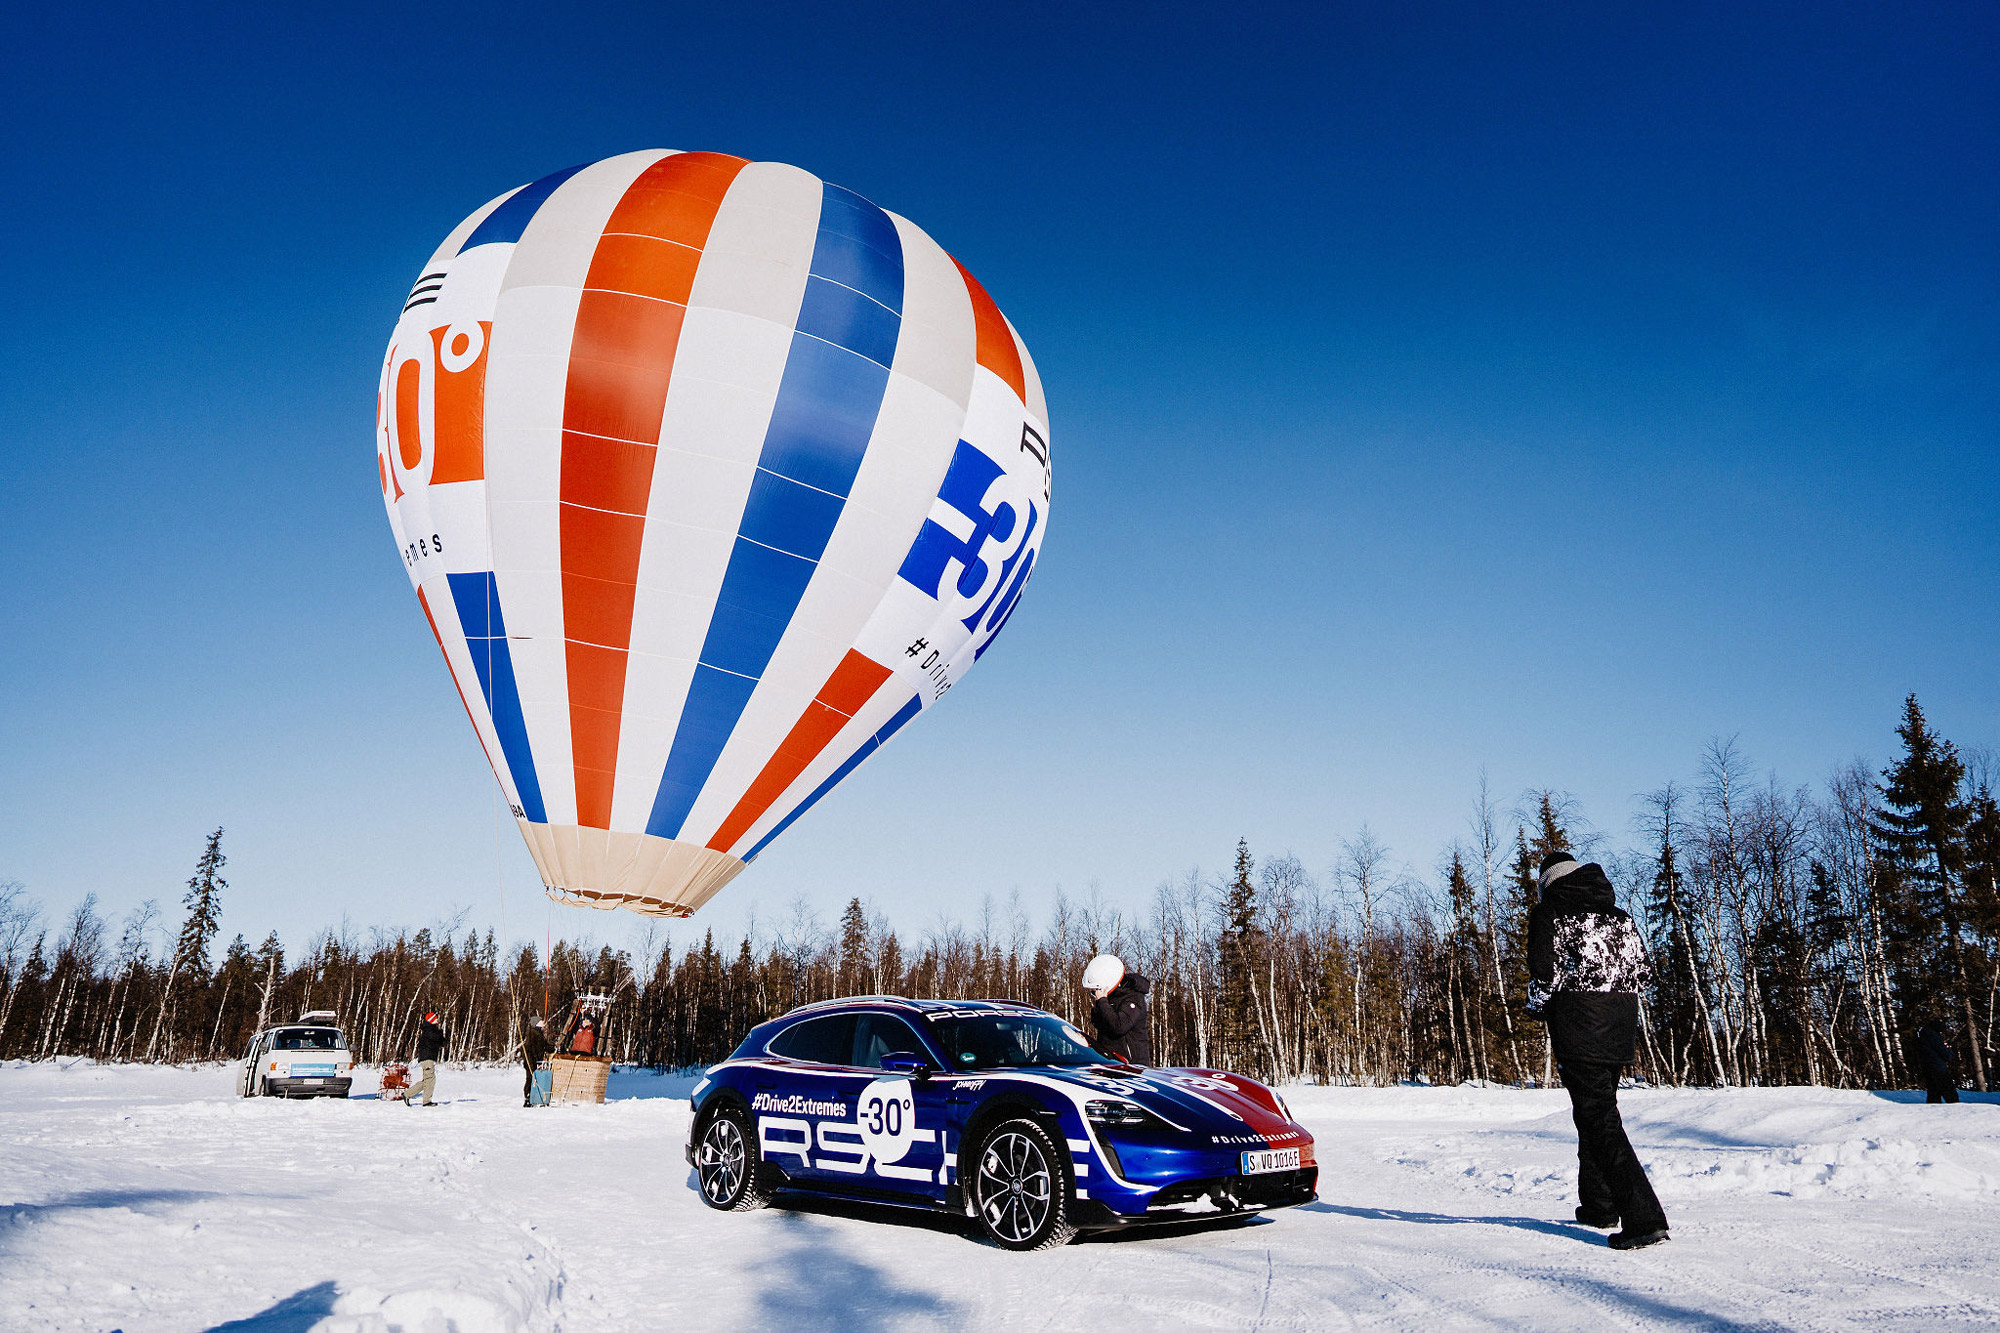 Porsche Taycan and hot air balloon in a snowy scene